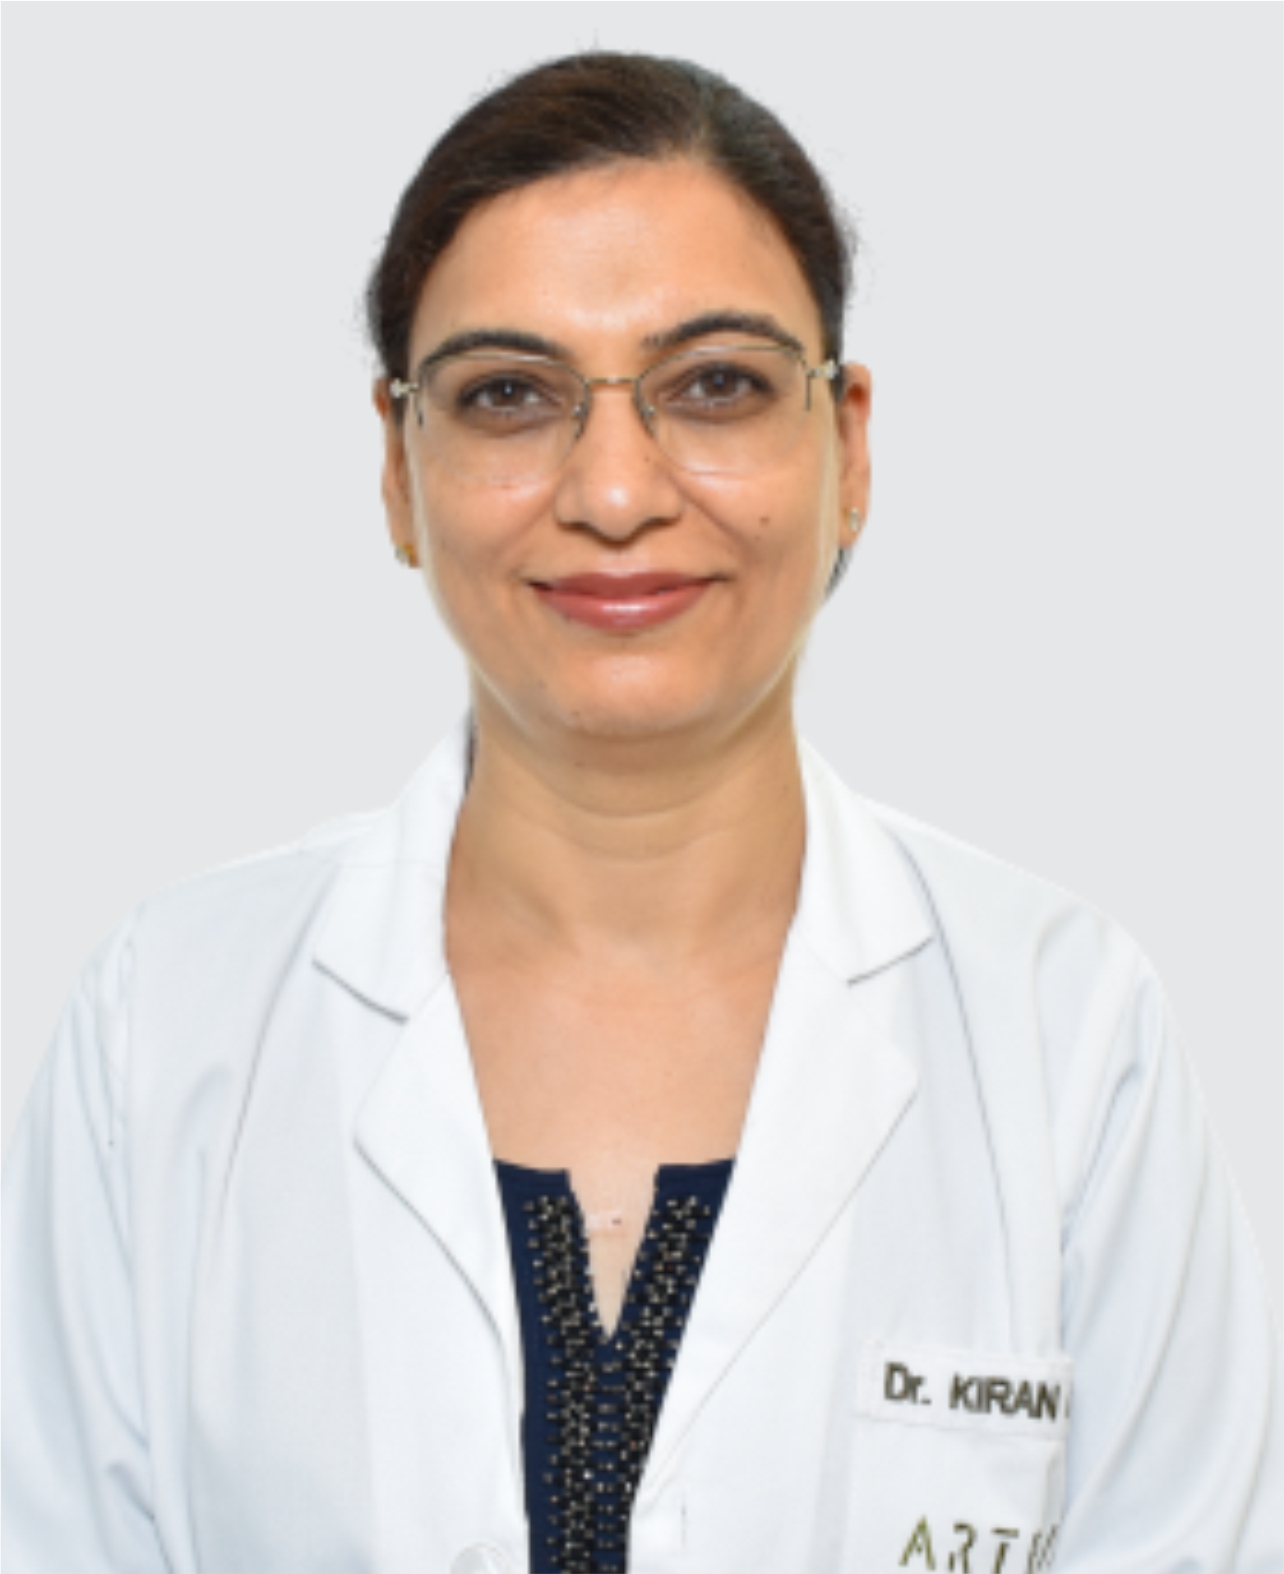 Dr. Kiran Arora